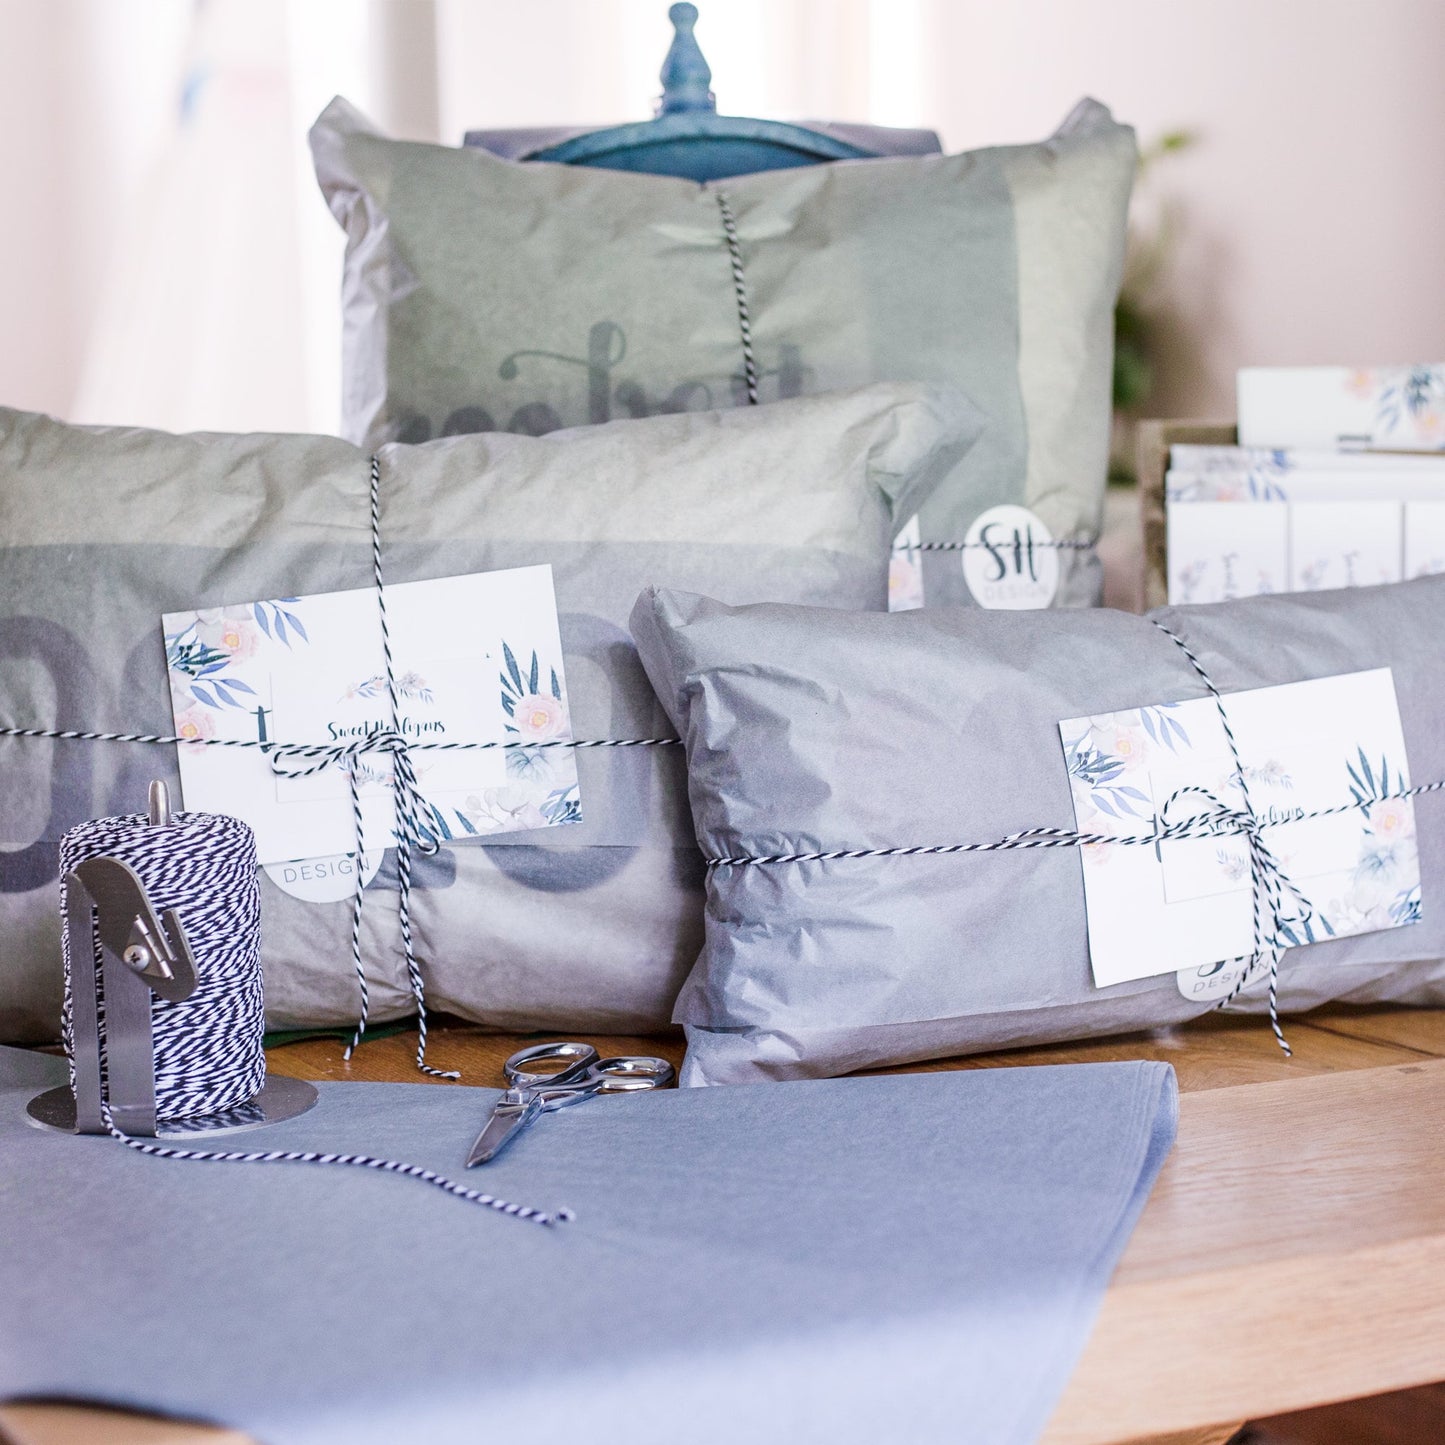 Grateful & Thankful Pillow | Personalized Pillow | Fall Decor | Monogrammed Gift | Rustic Home Decor | Home Decor | Farmhouse Decor